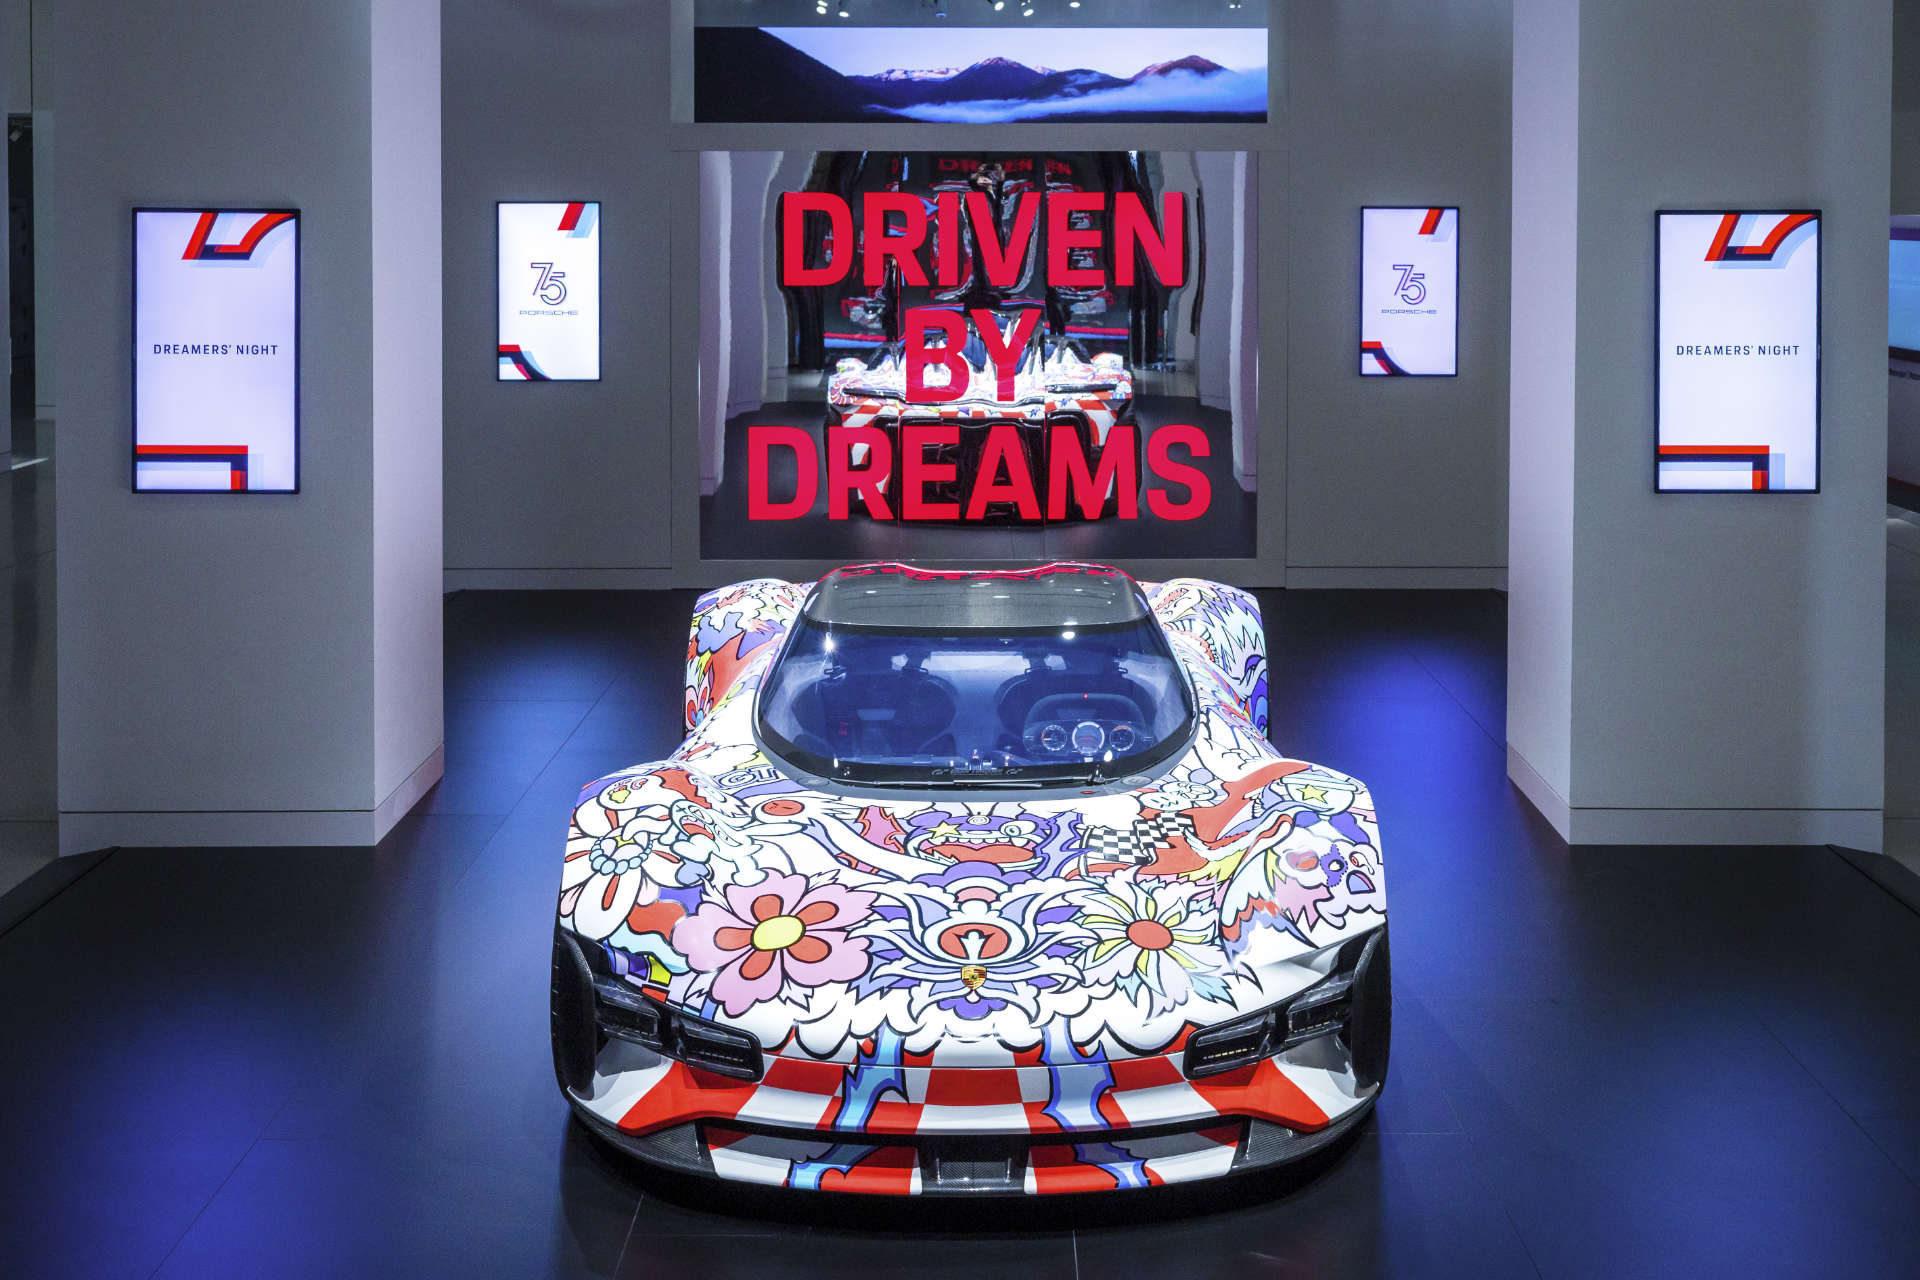 Driven by dreams